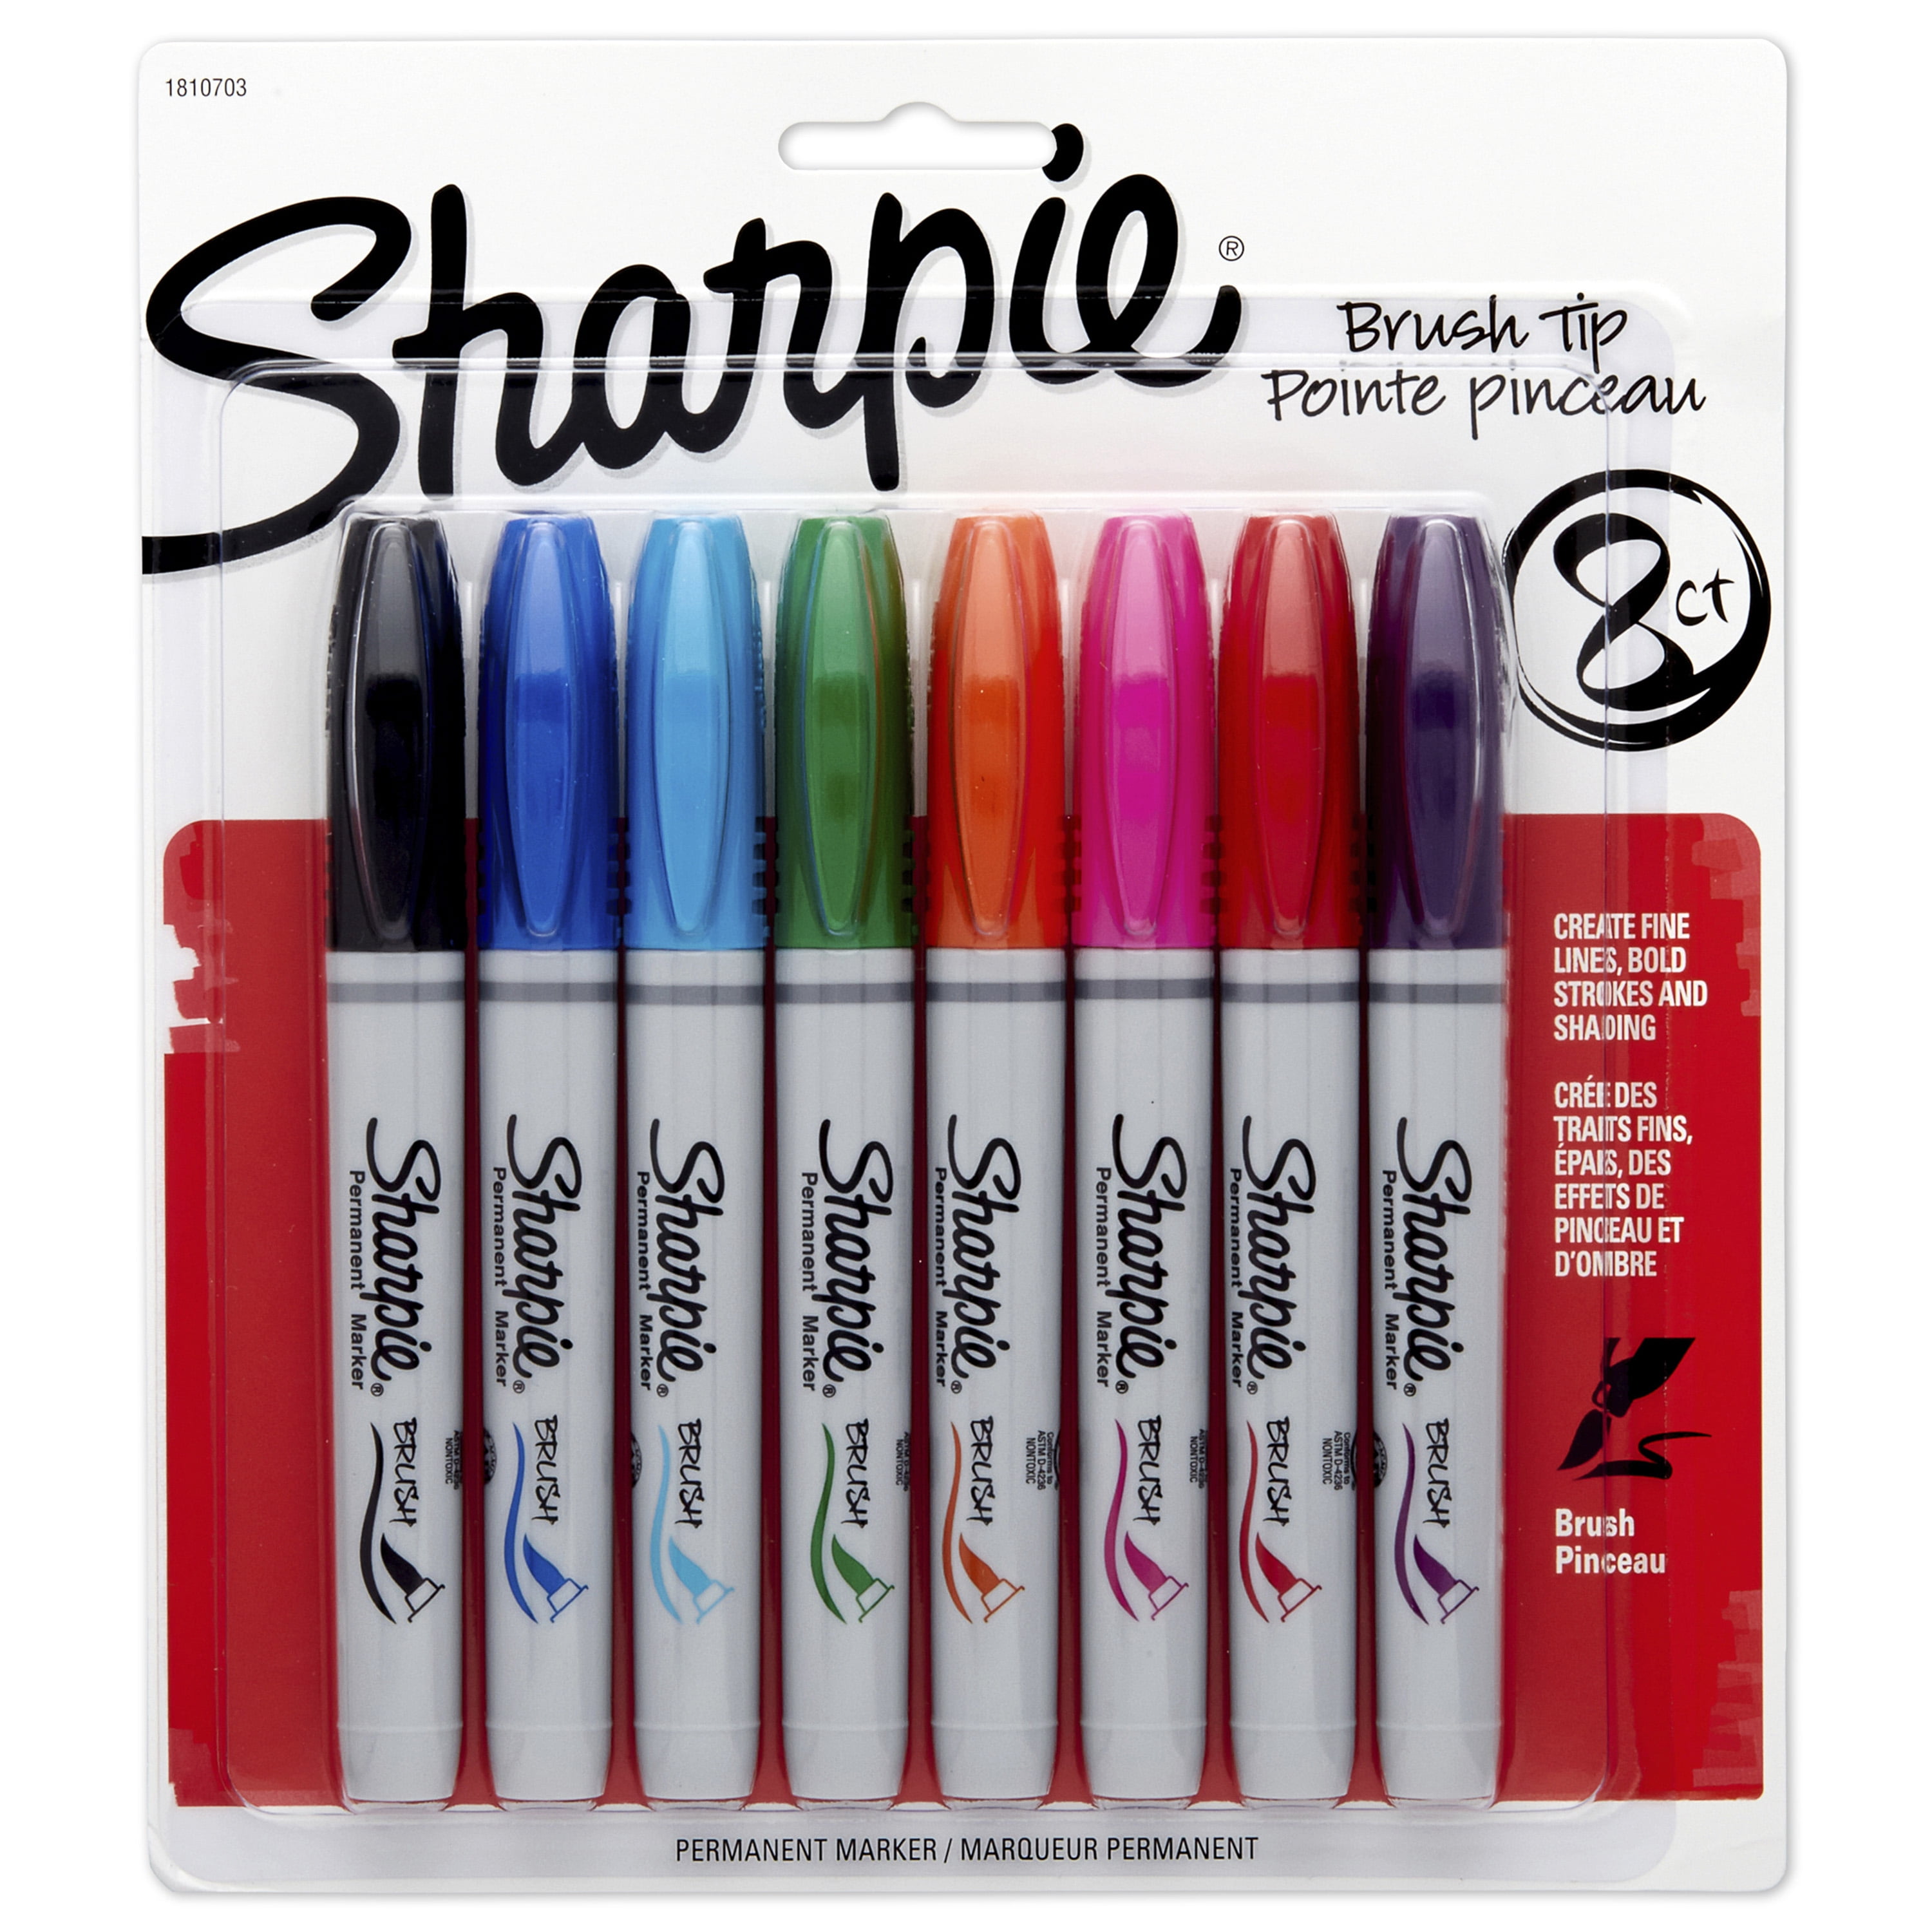 Sanford 35565 Sharpie Paint Marker Bold Point Red for sale online 